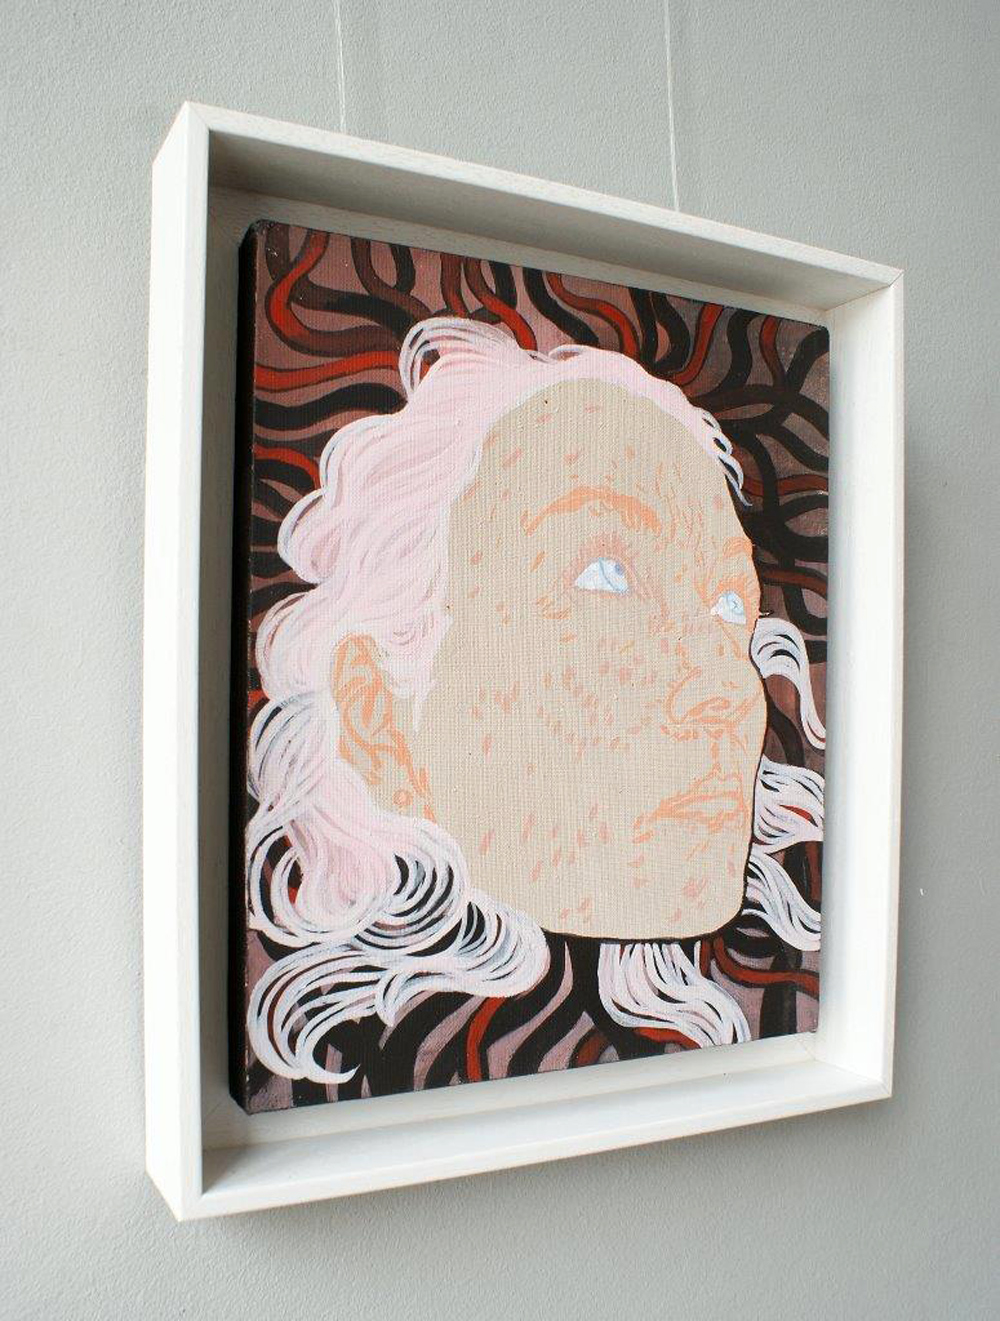 Agnieszka Sandomierz - Medusa (Tempera on canvas | Size: 31 x 36 cm | Price: 2200 PLN)